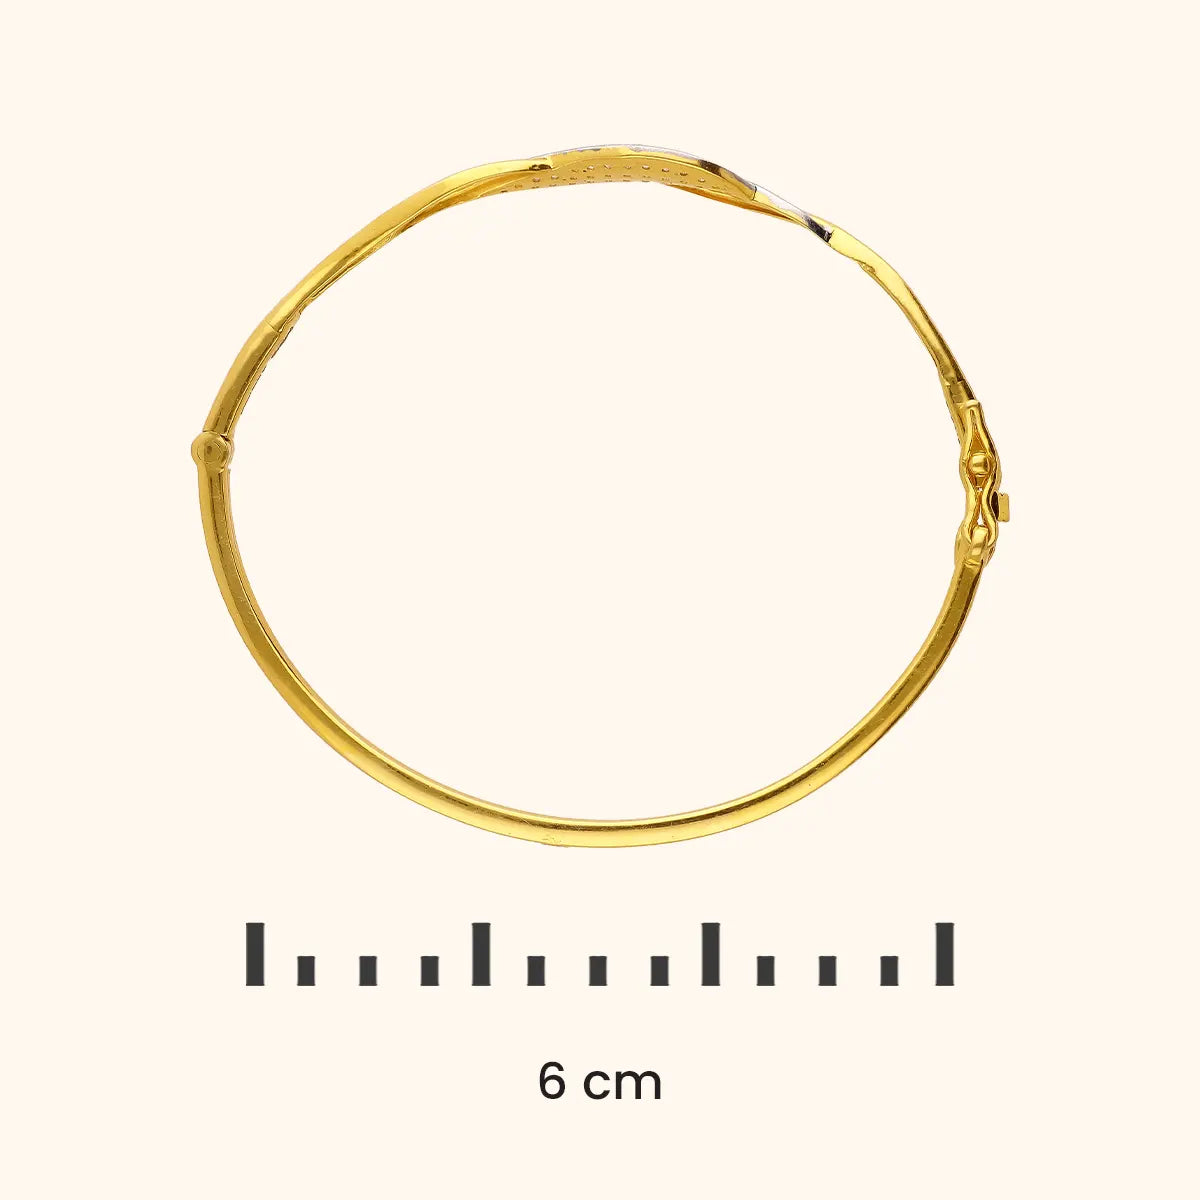 Customised 14K Rose Gold Bracelet with Diamonds